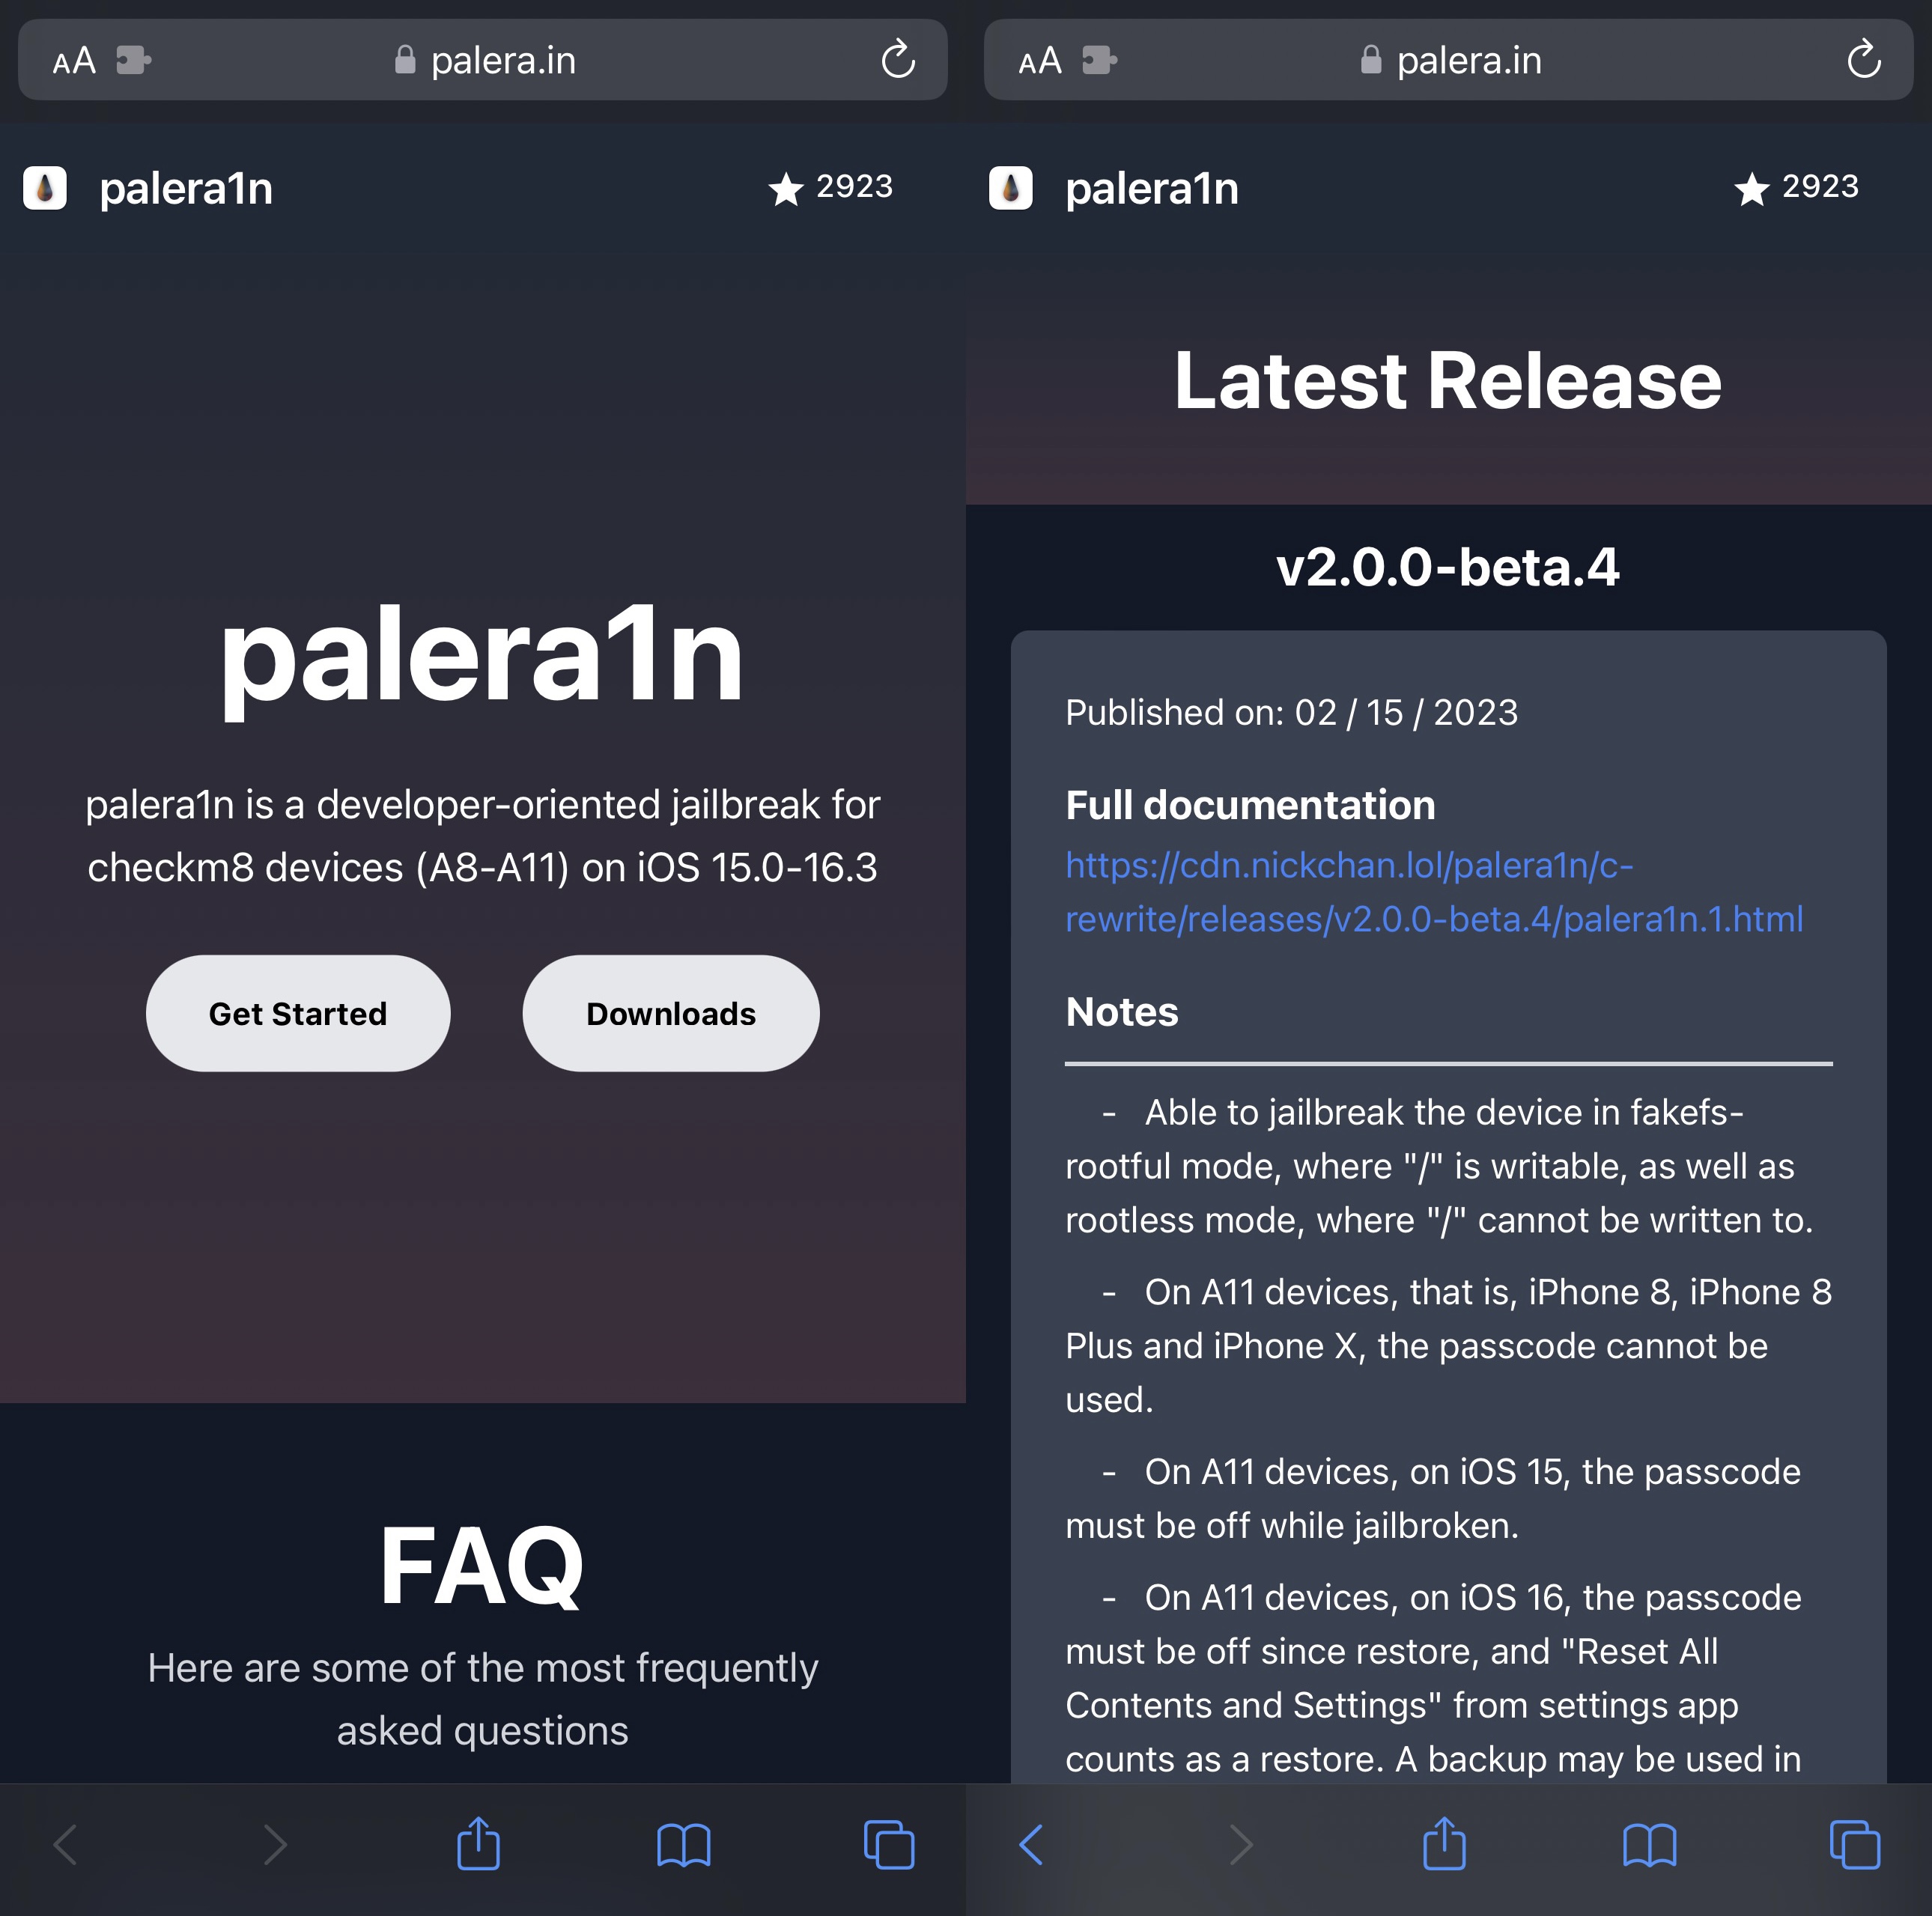 palera1n website downloads.